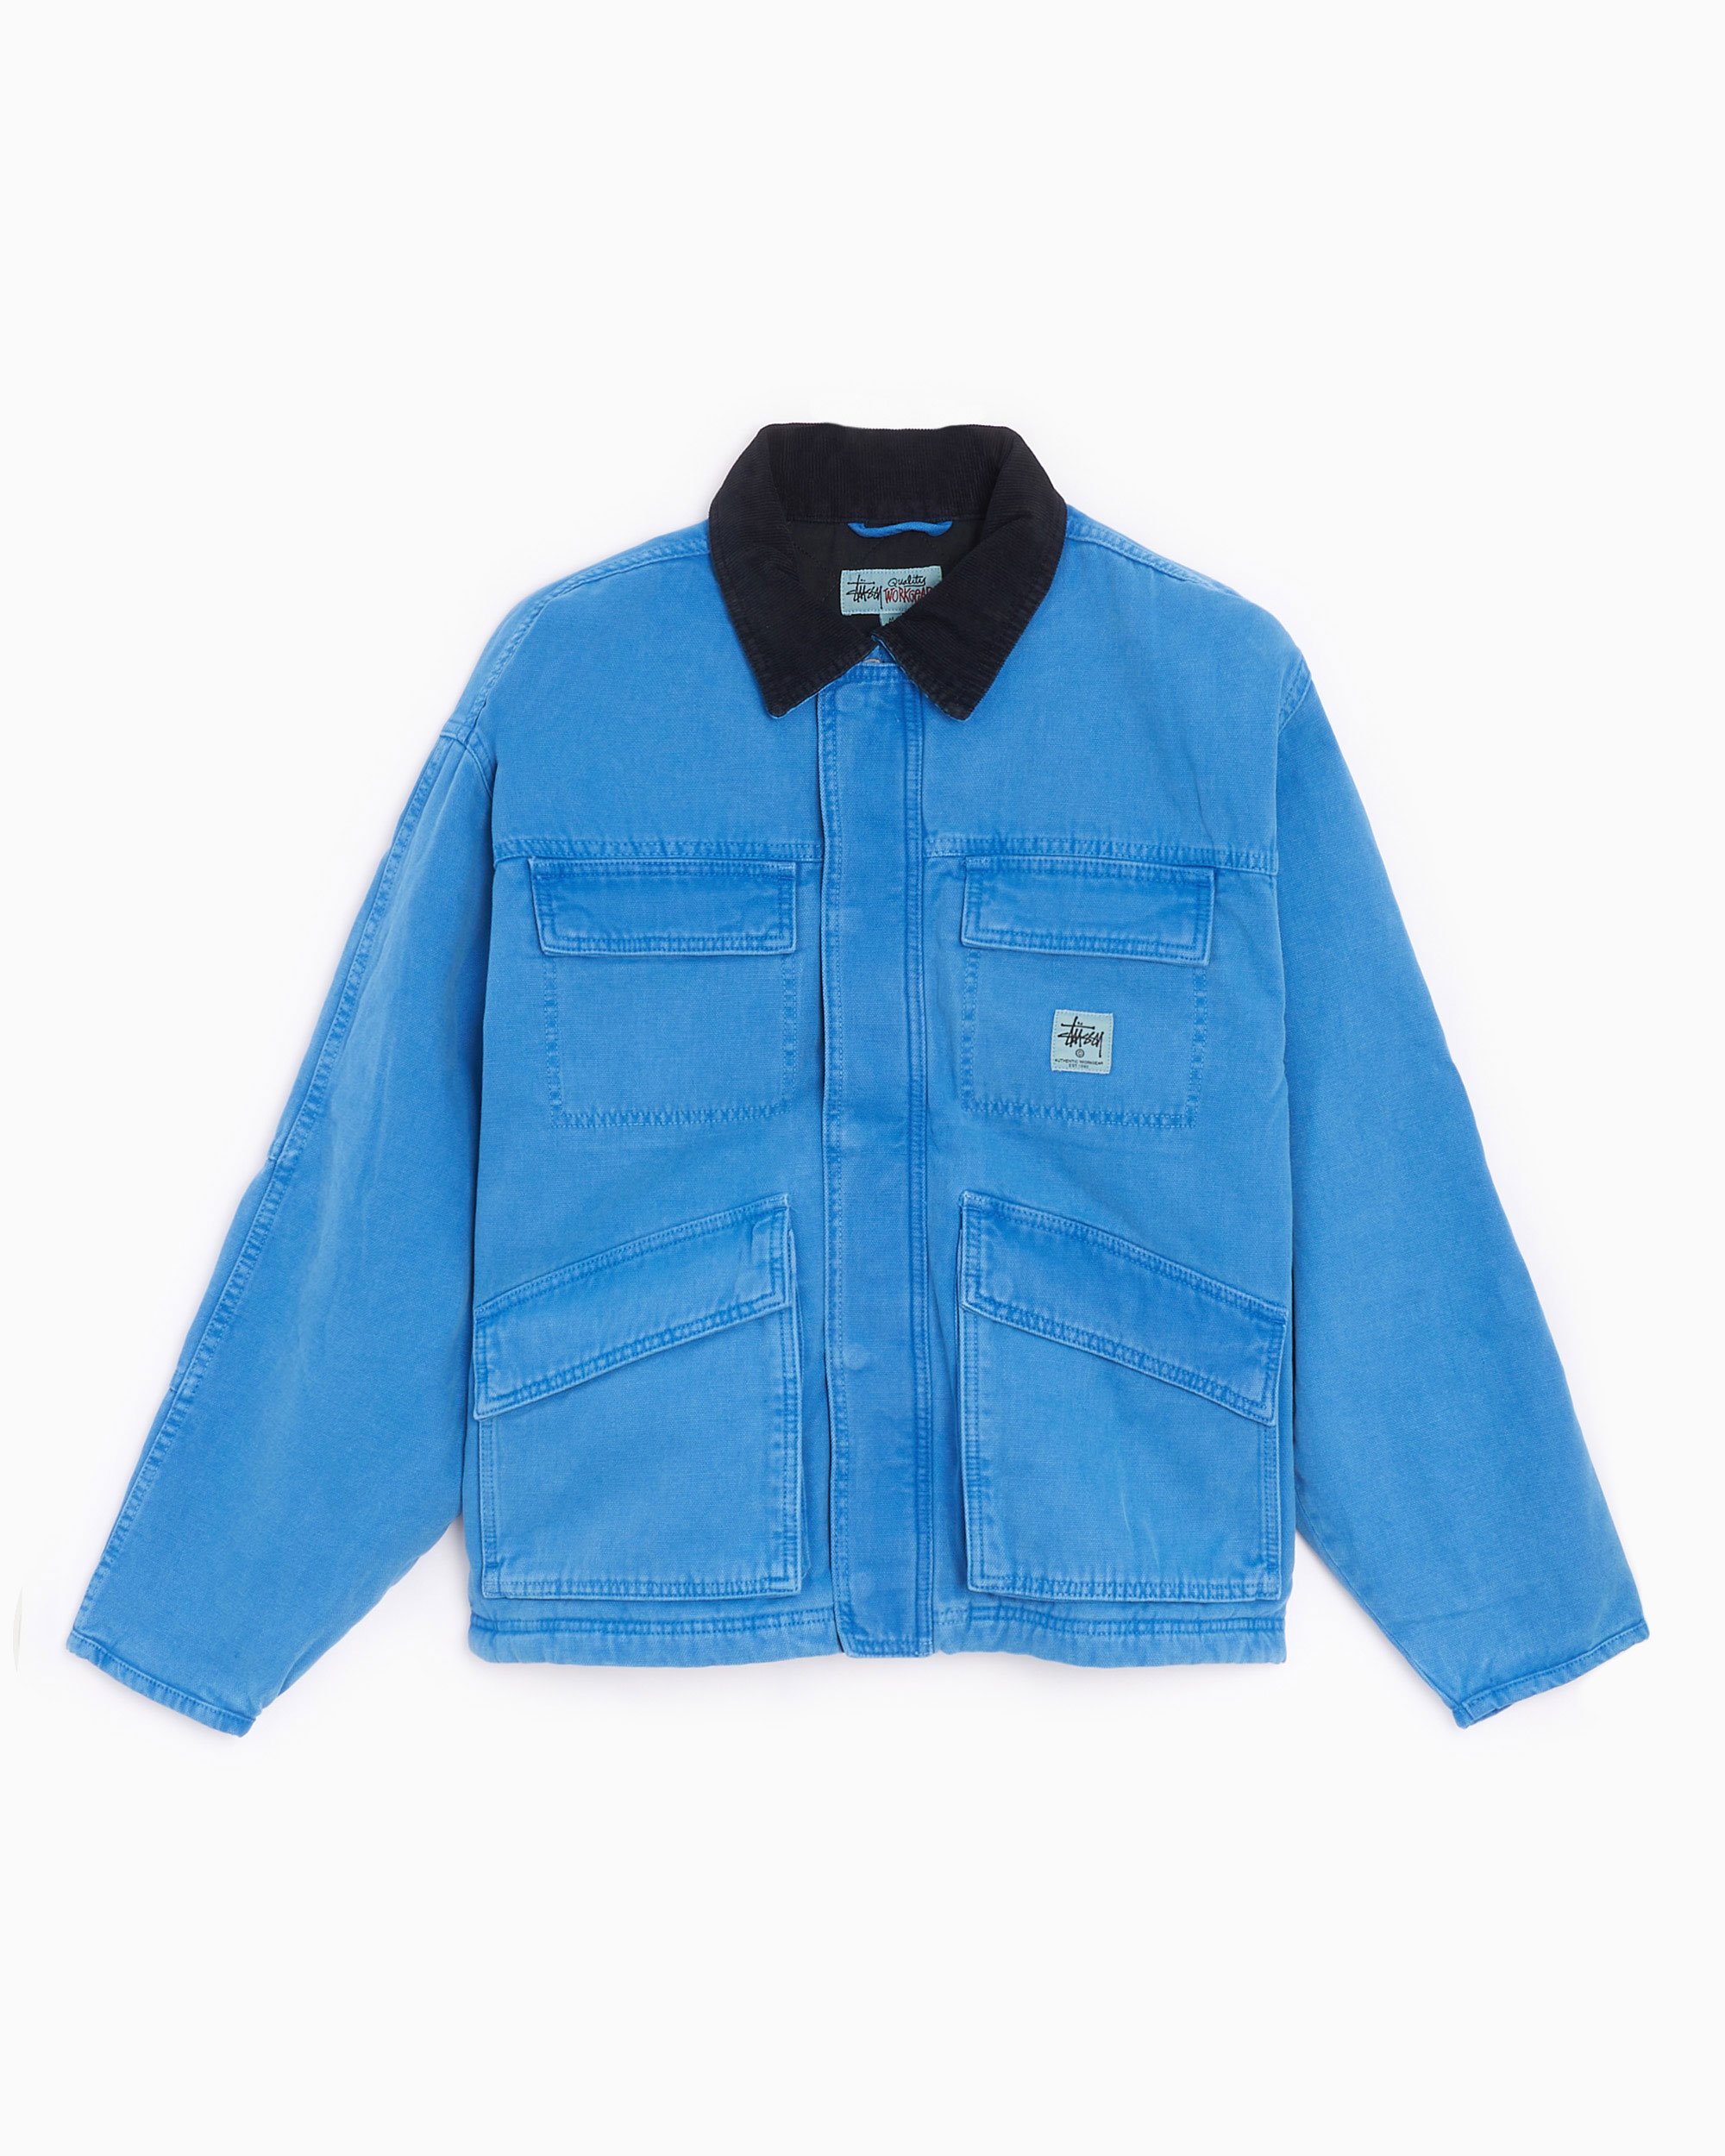 Stüssy Washed Canvas Shop Men's Jacket Blue 115589E-BLUE| Buy